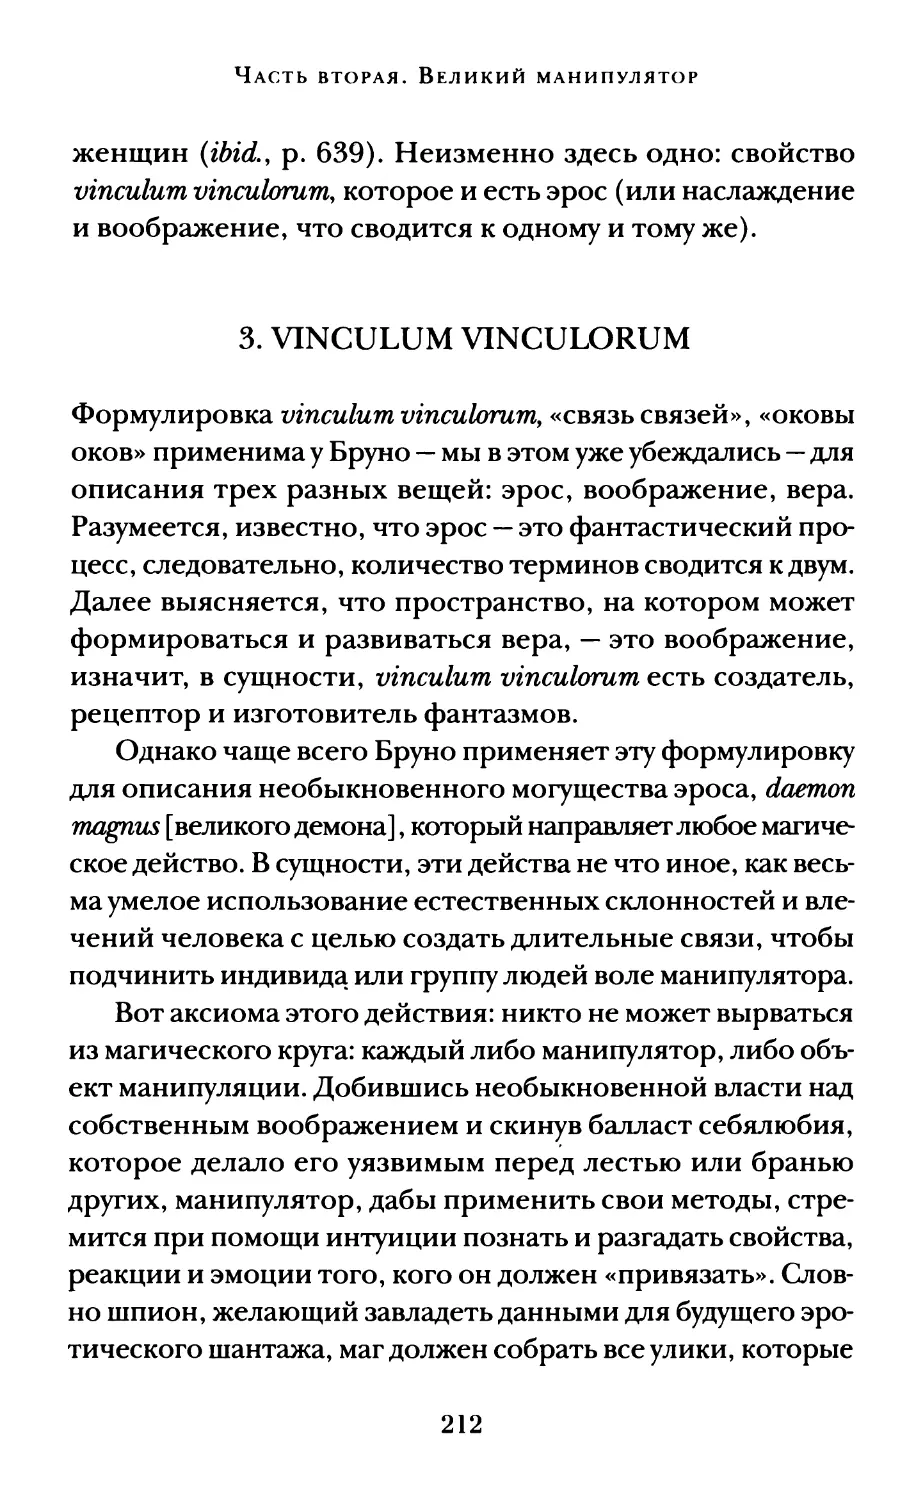 3. Vinculum vinculorum